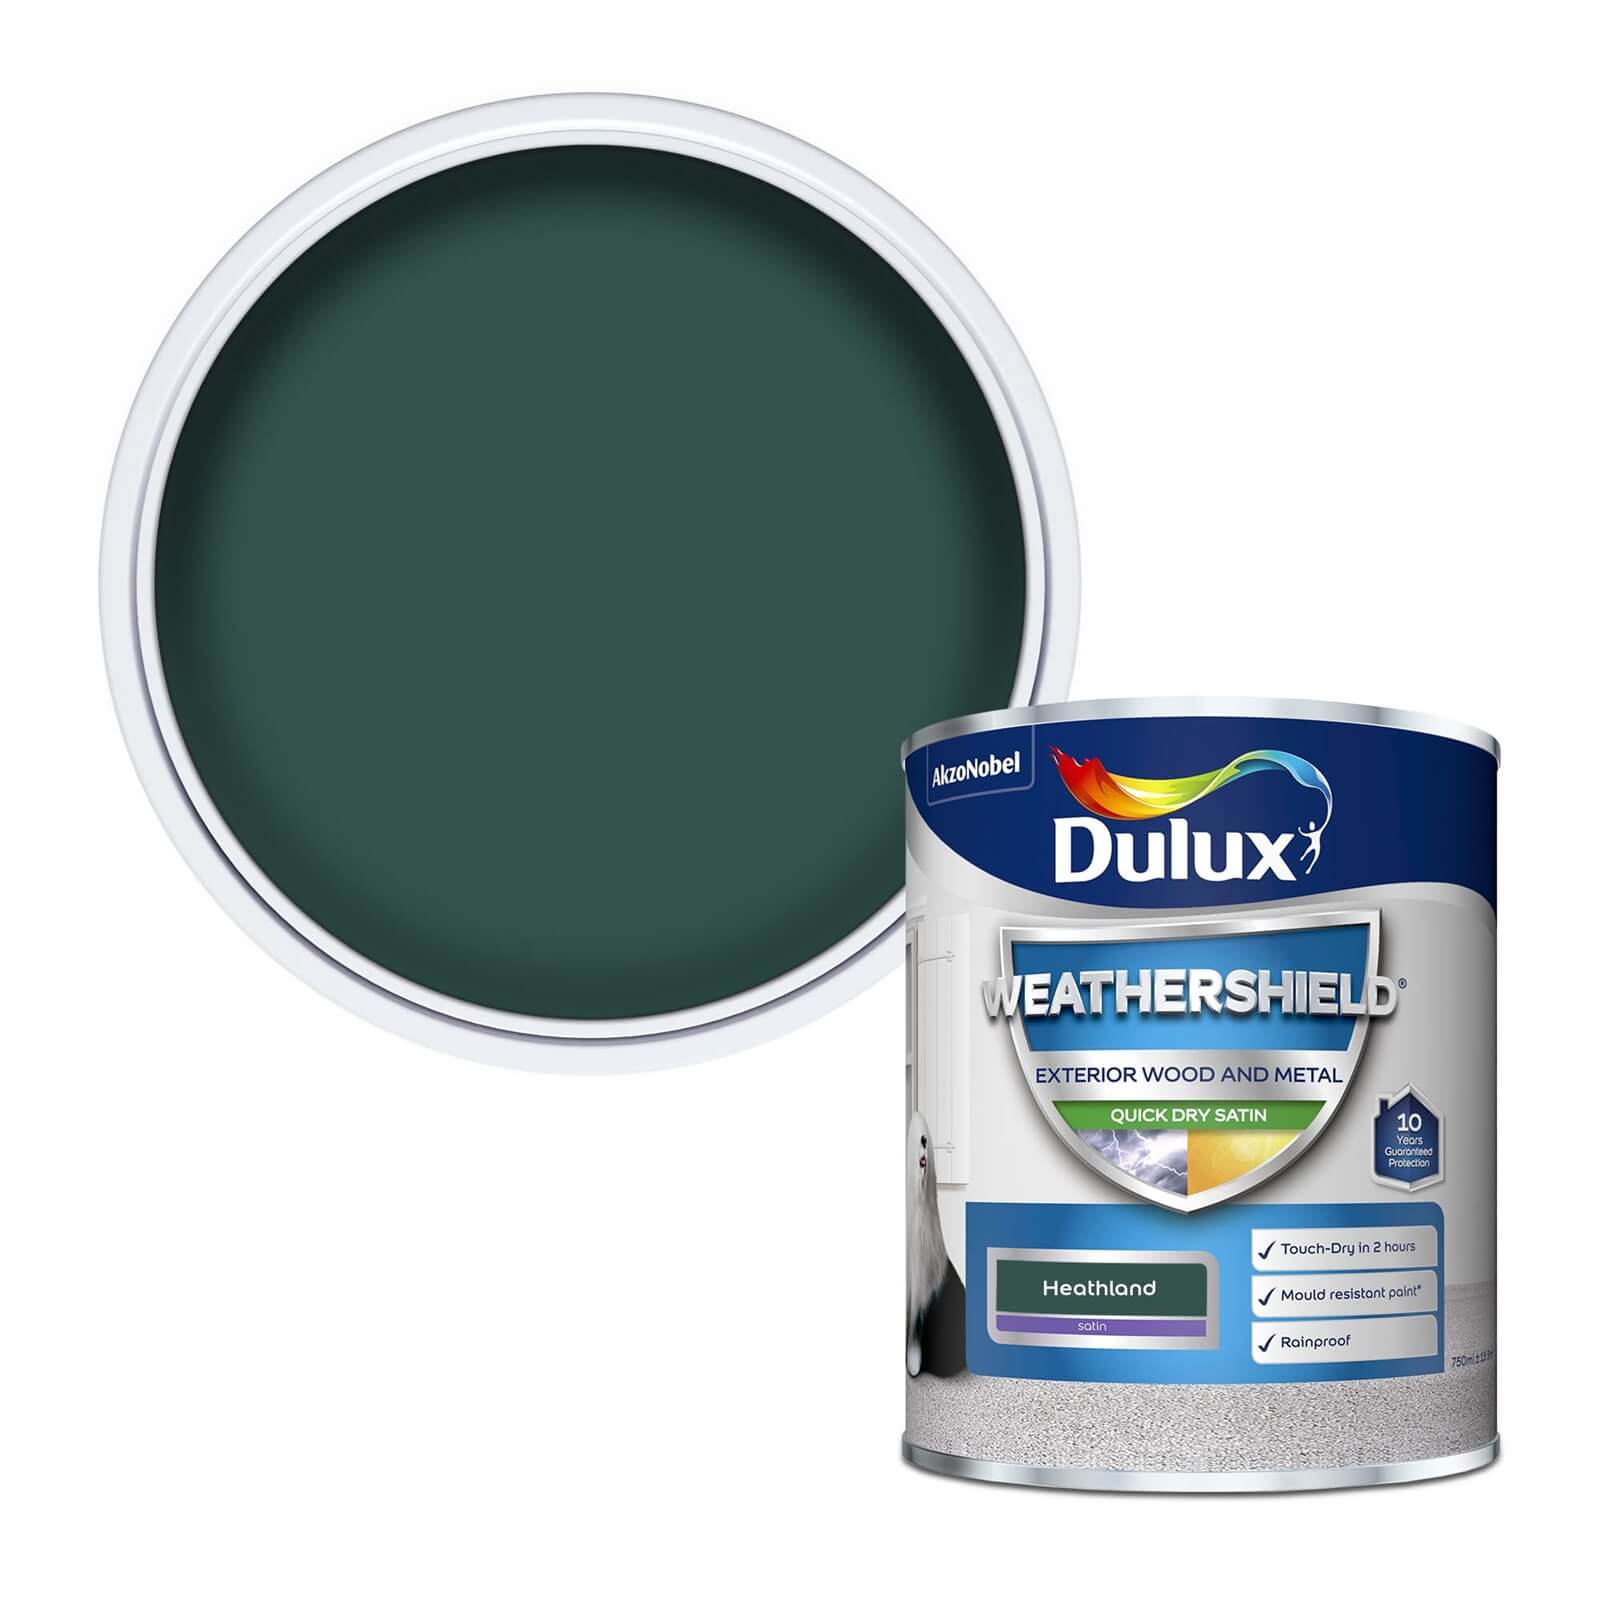 Dulux Weathershield Exterior Quick Dry Satin Paint Heathland - 750ml